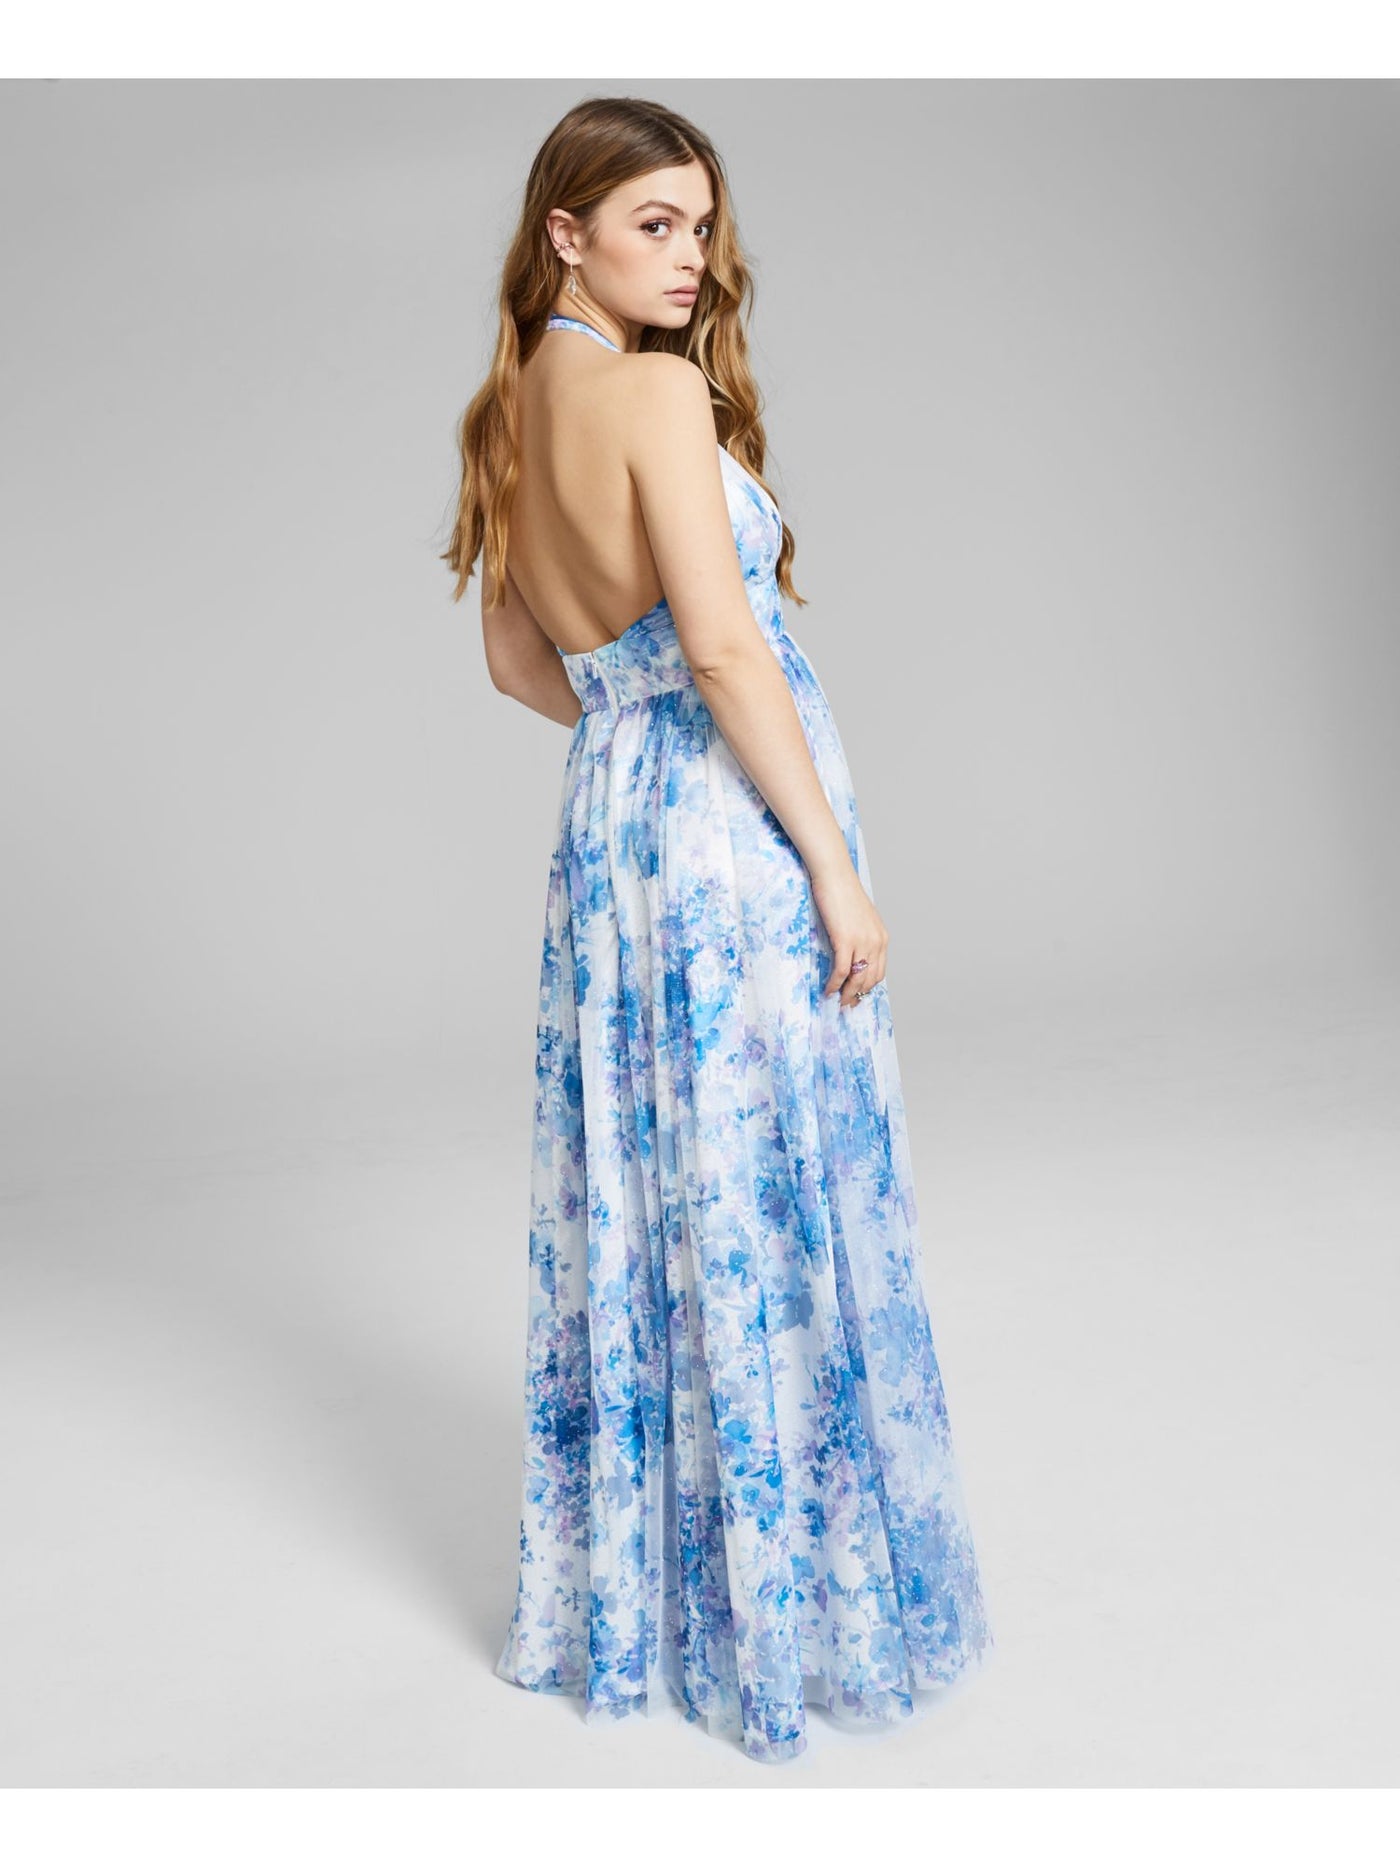 BCX DRESS Womens Light Blue Glitter Zippered Mesh Overlay Floral Sleeveless Surplice Neckline Full-Length Formal Gown Dress Juniors 13